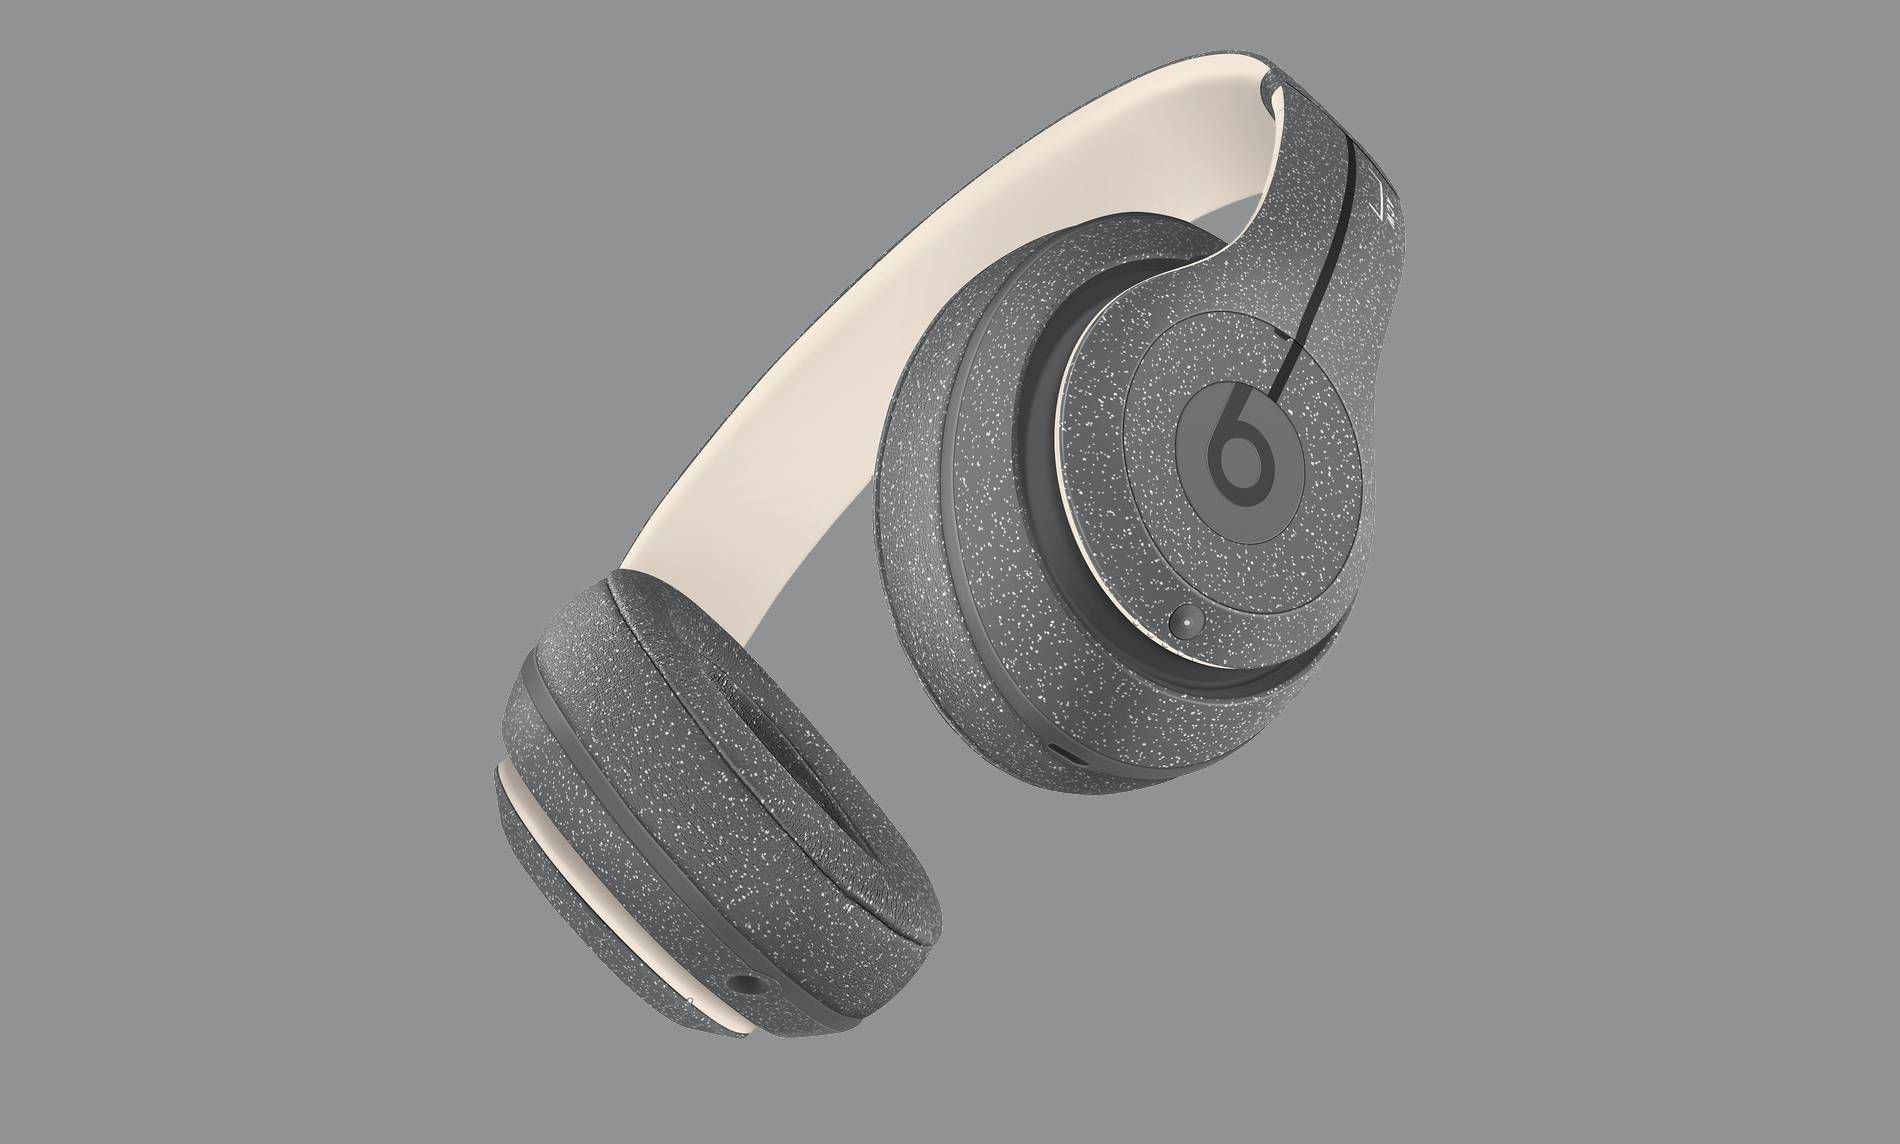 Apple Reveals New Limited Edition Beats Studio3 Headphones